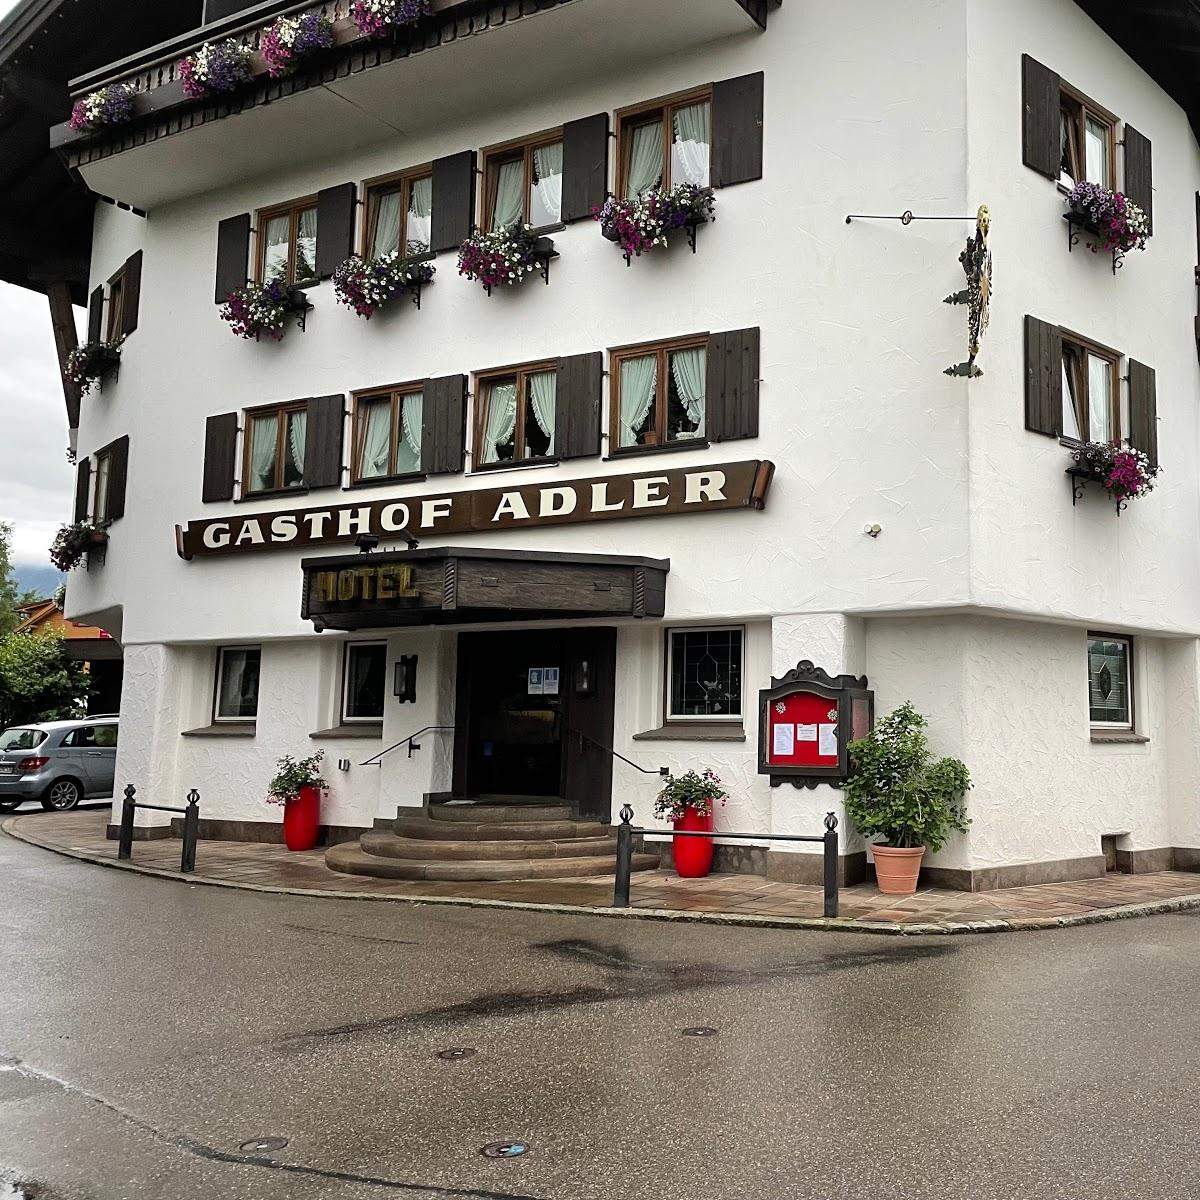 Restaurant "Hotel Gasthof Adler" in Oberstdorf